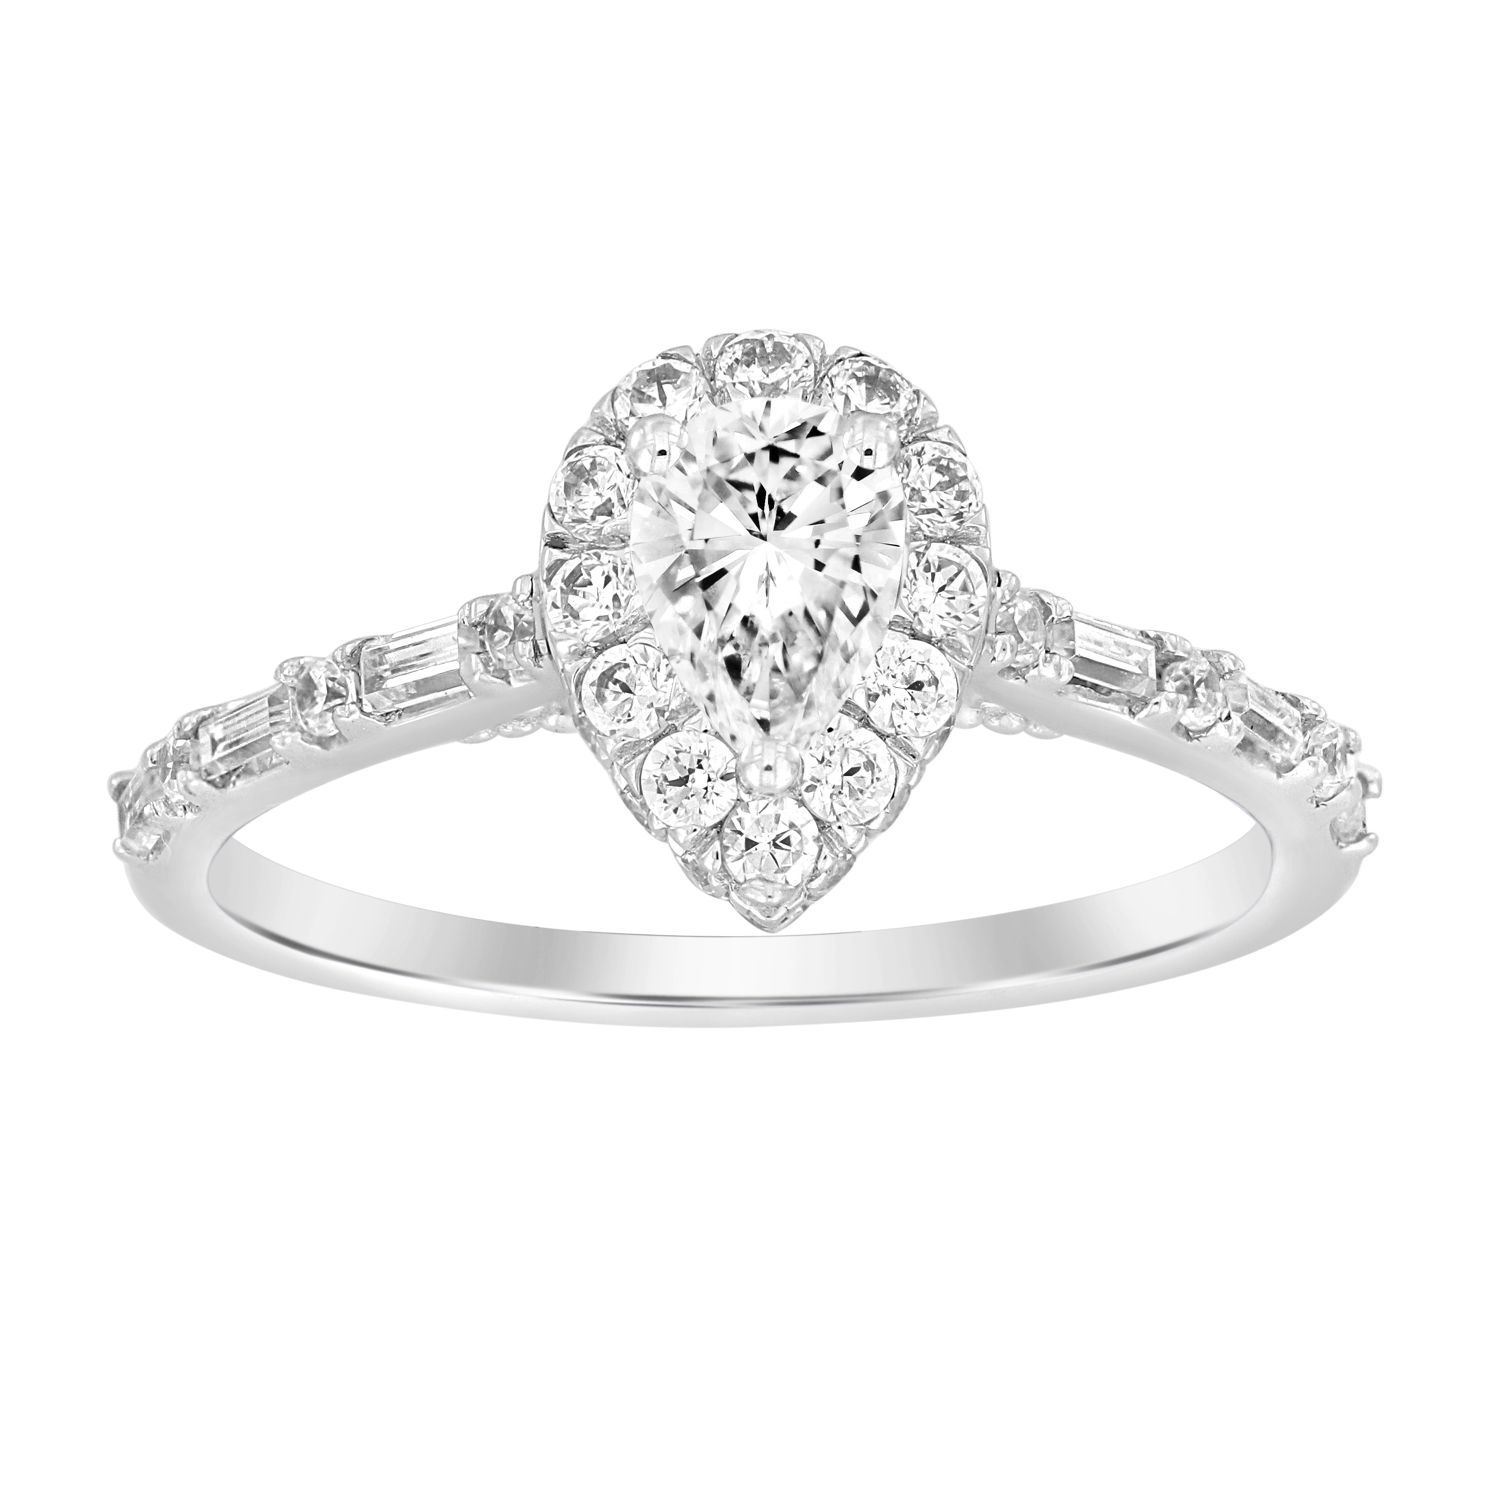 0019196 ladies ring 1 ct roundbaguettepear diamond 14k white gold center 12 si quality